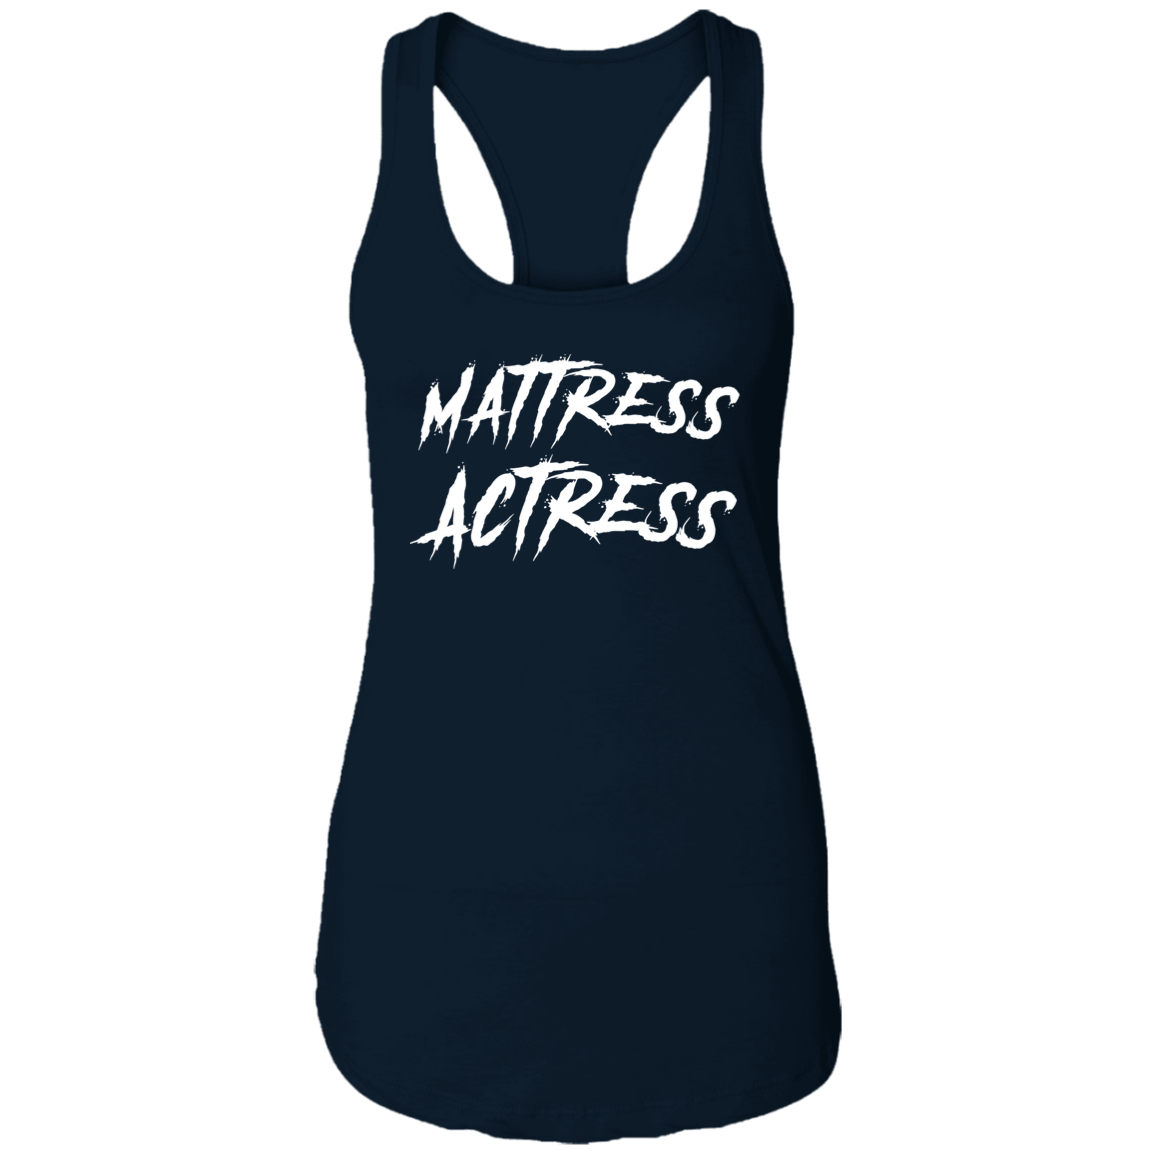 "Mattress Actress" Ladies Ideal Racerback Tank